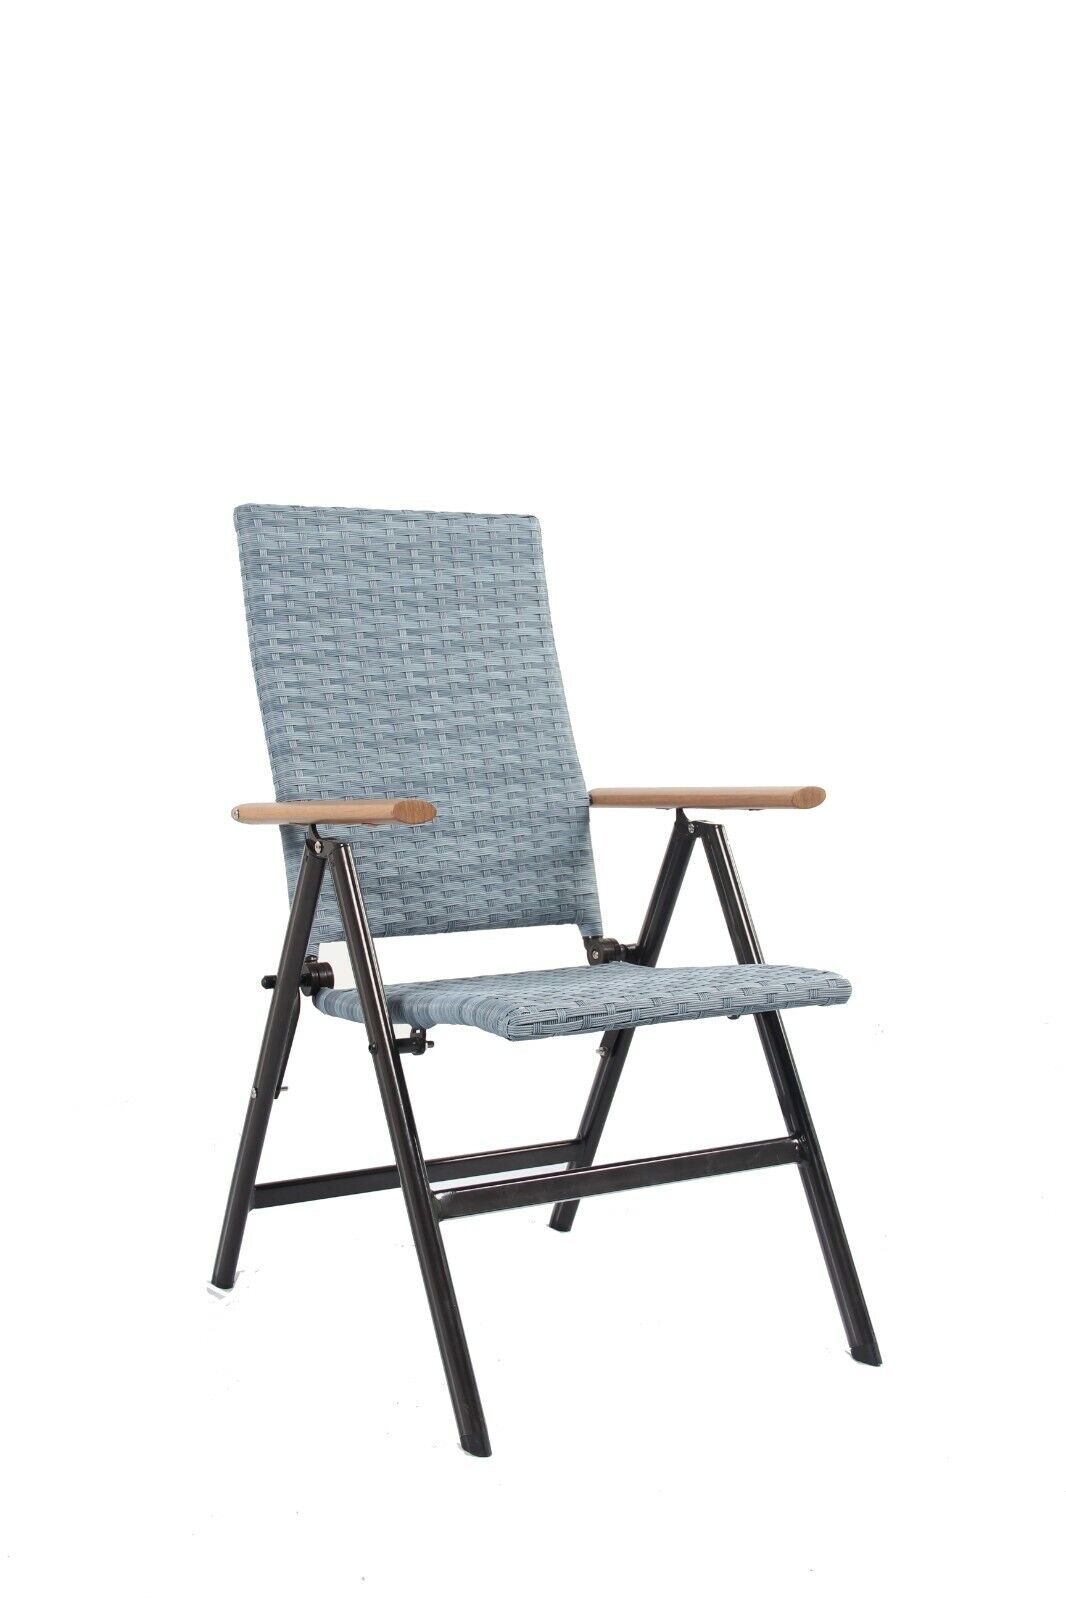 Folding Camping Chairs Picnic Fishing Deck Chair Beach Outdoor Seat Garden Patio